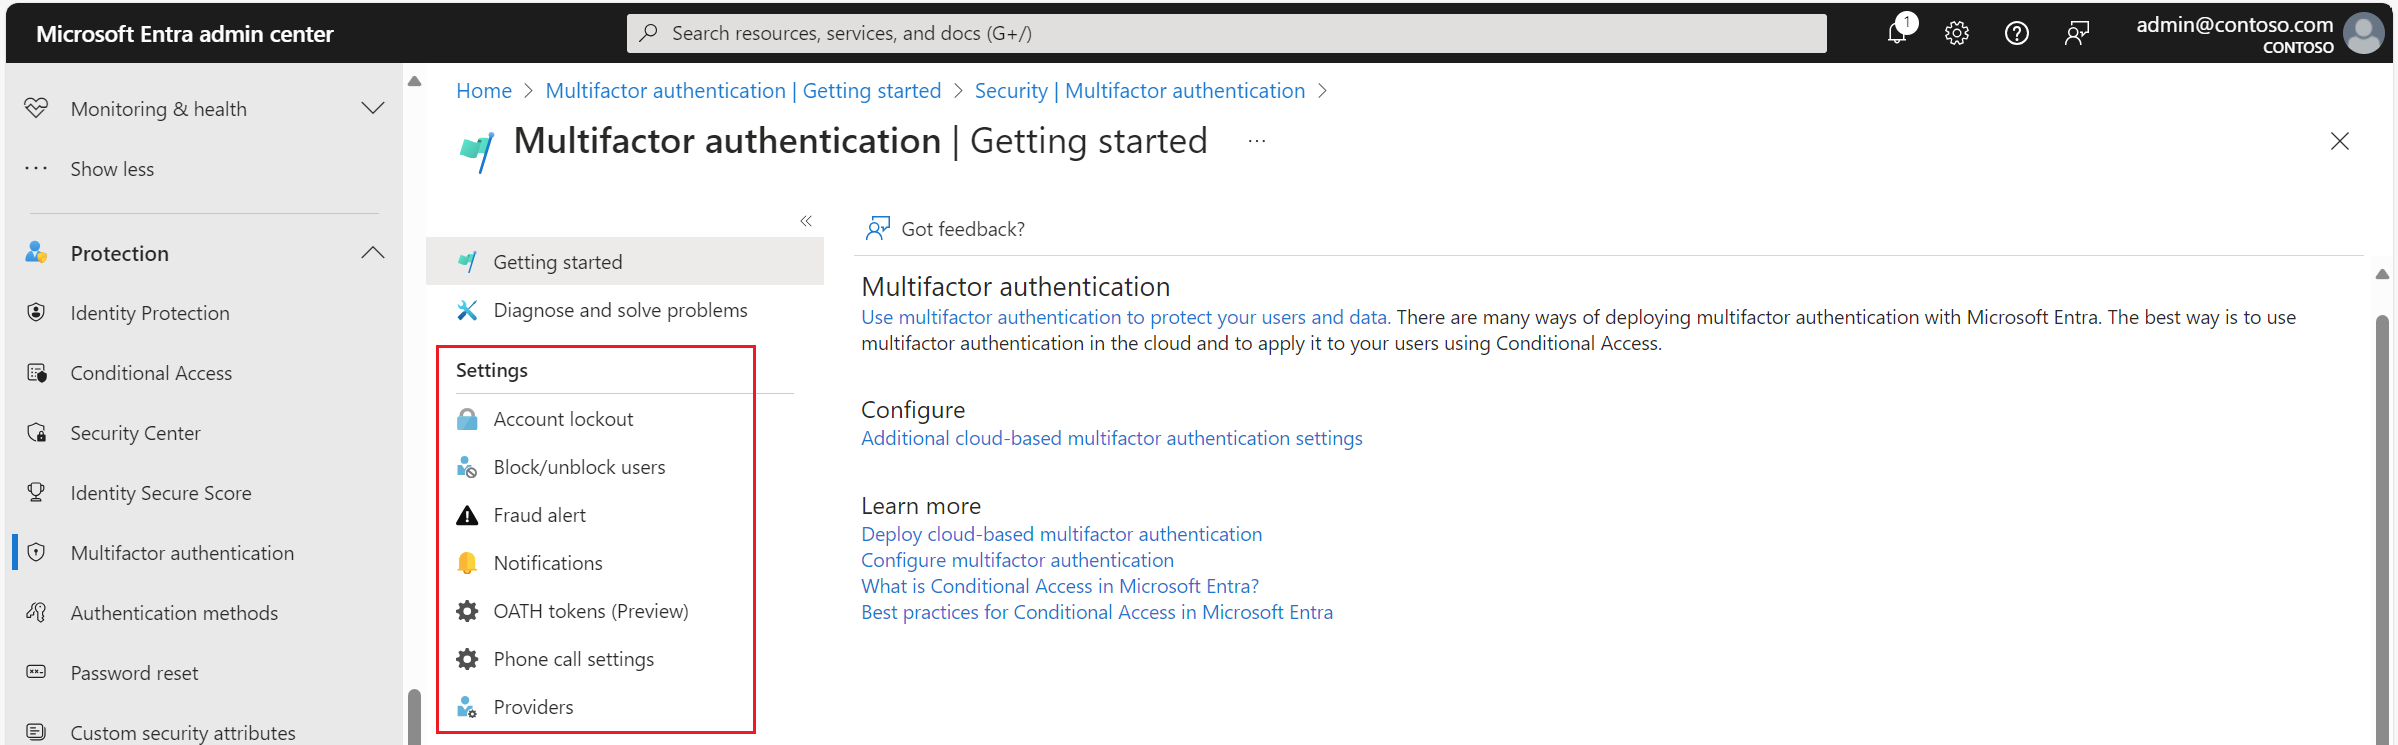 Microsoft Entra configuración de autenticación multifactor